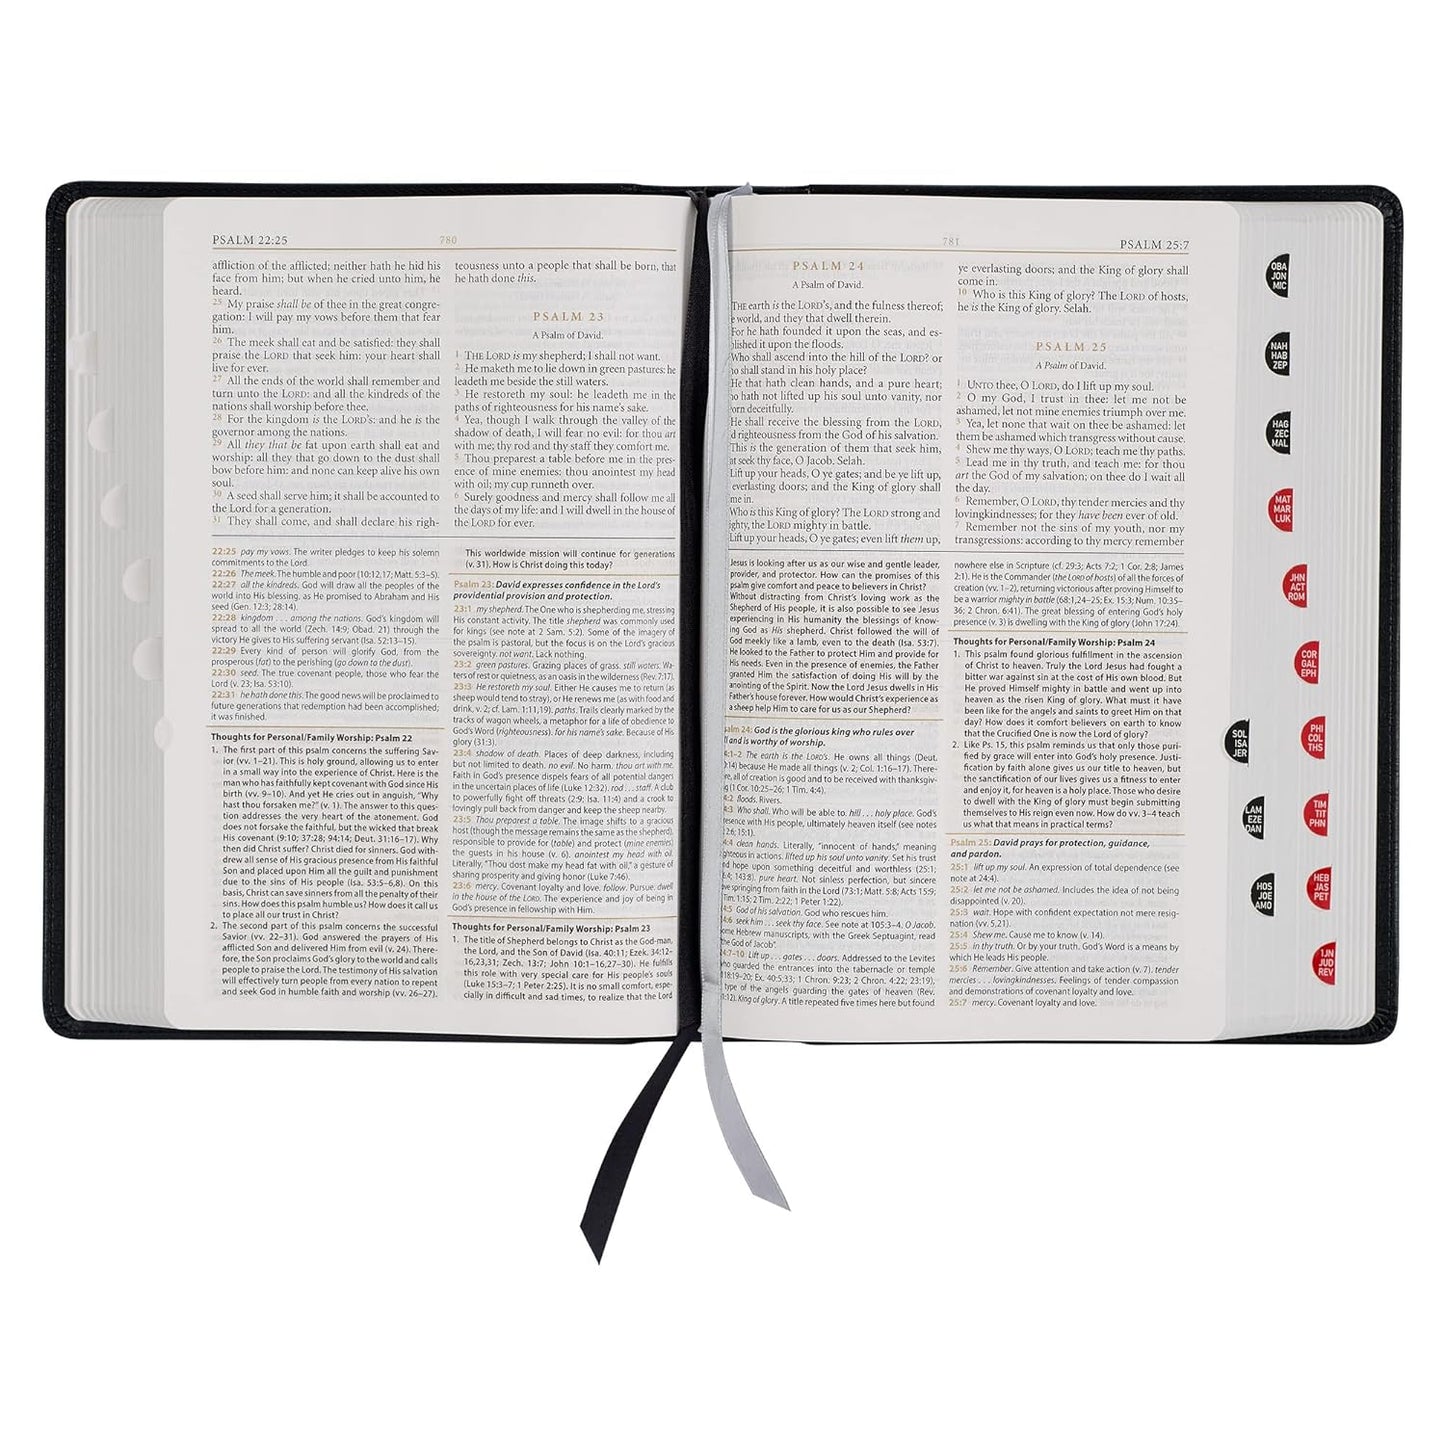 Christian Art Publishers KJV - Study Bible, Standard Edition - Thumb Indexed - Imitation Leather (Black)